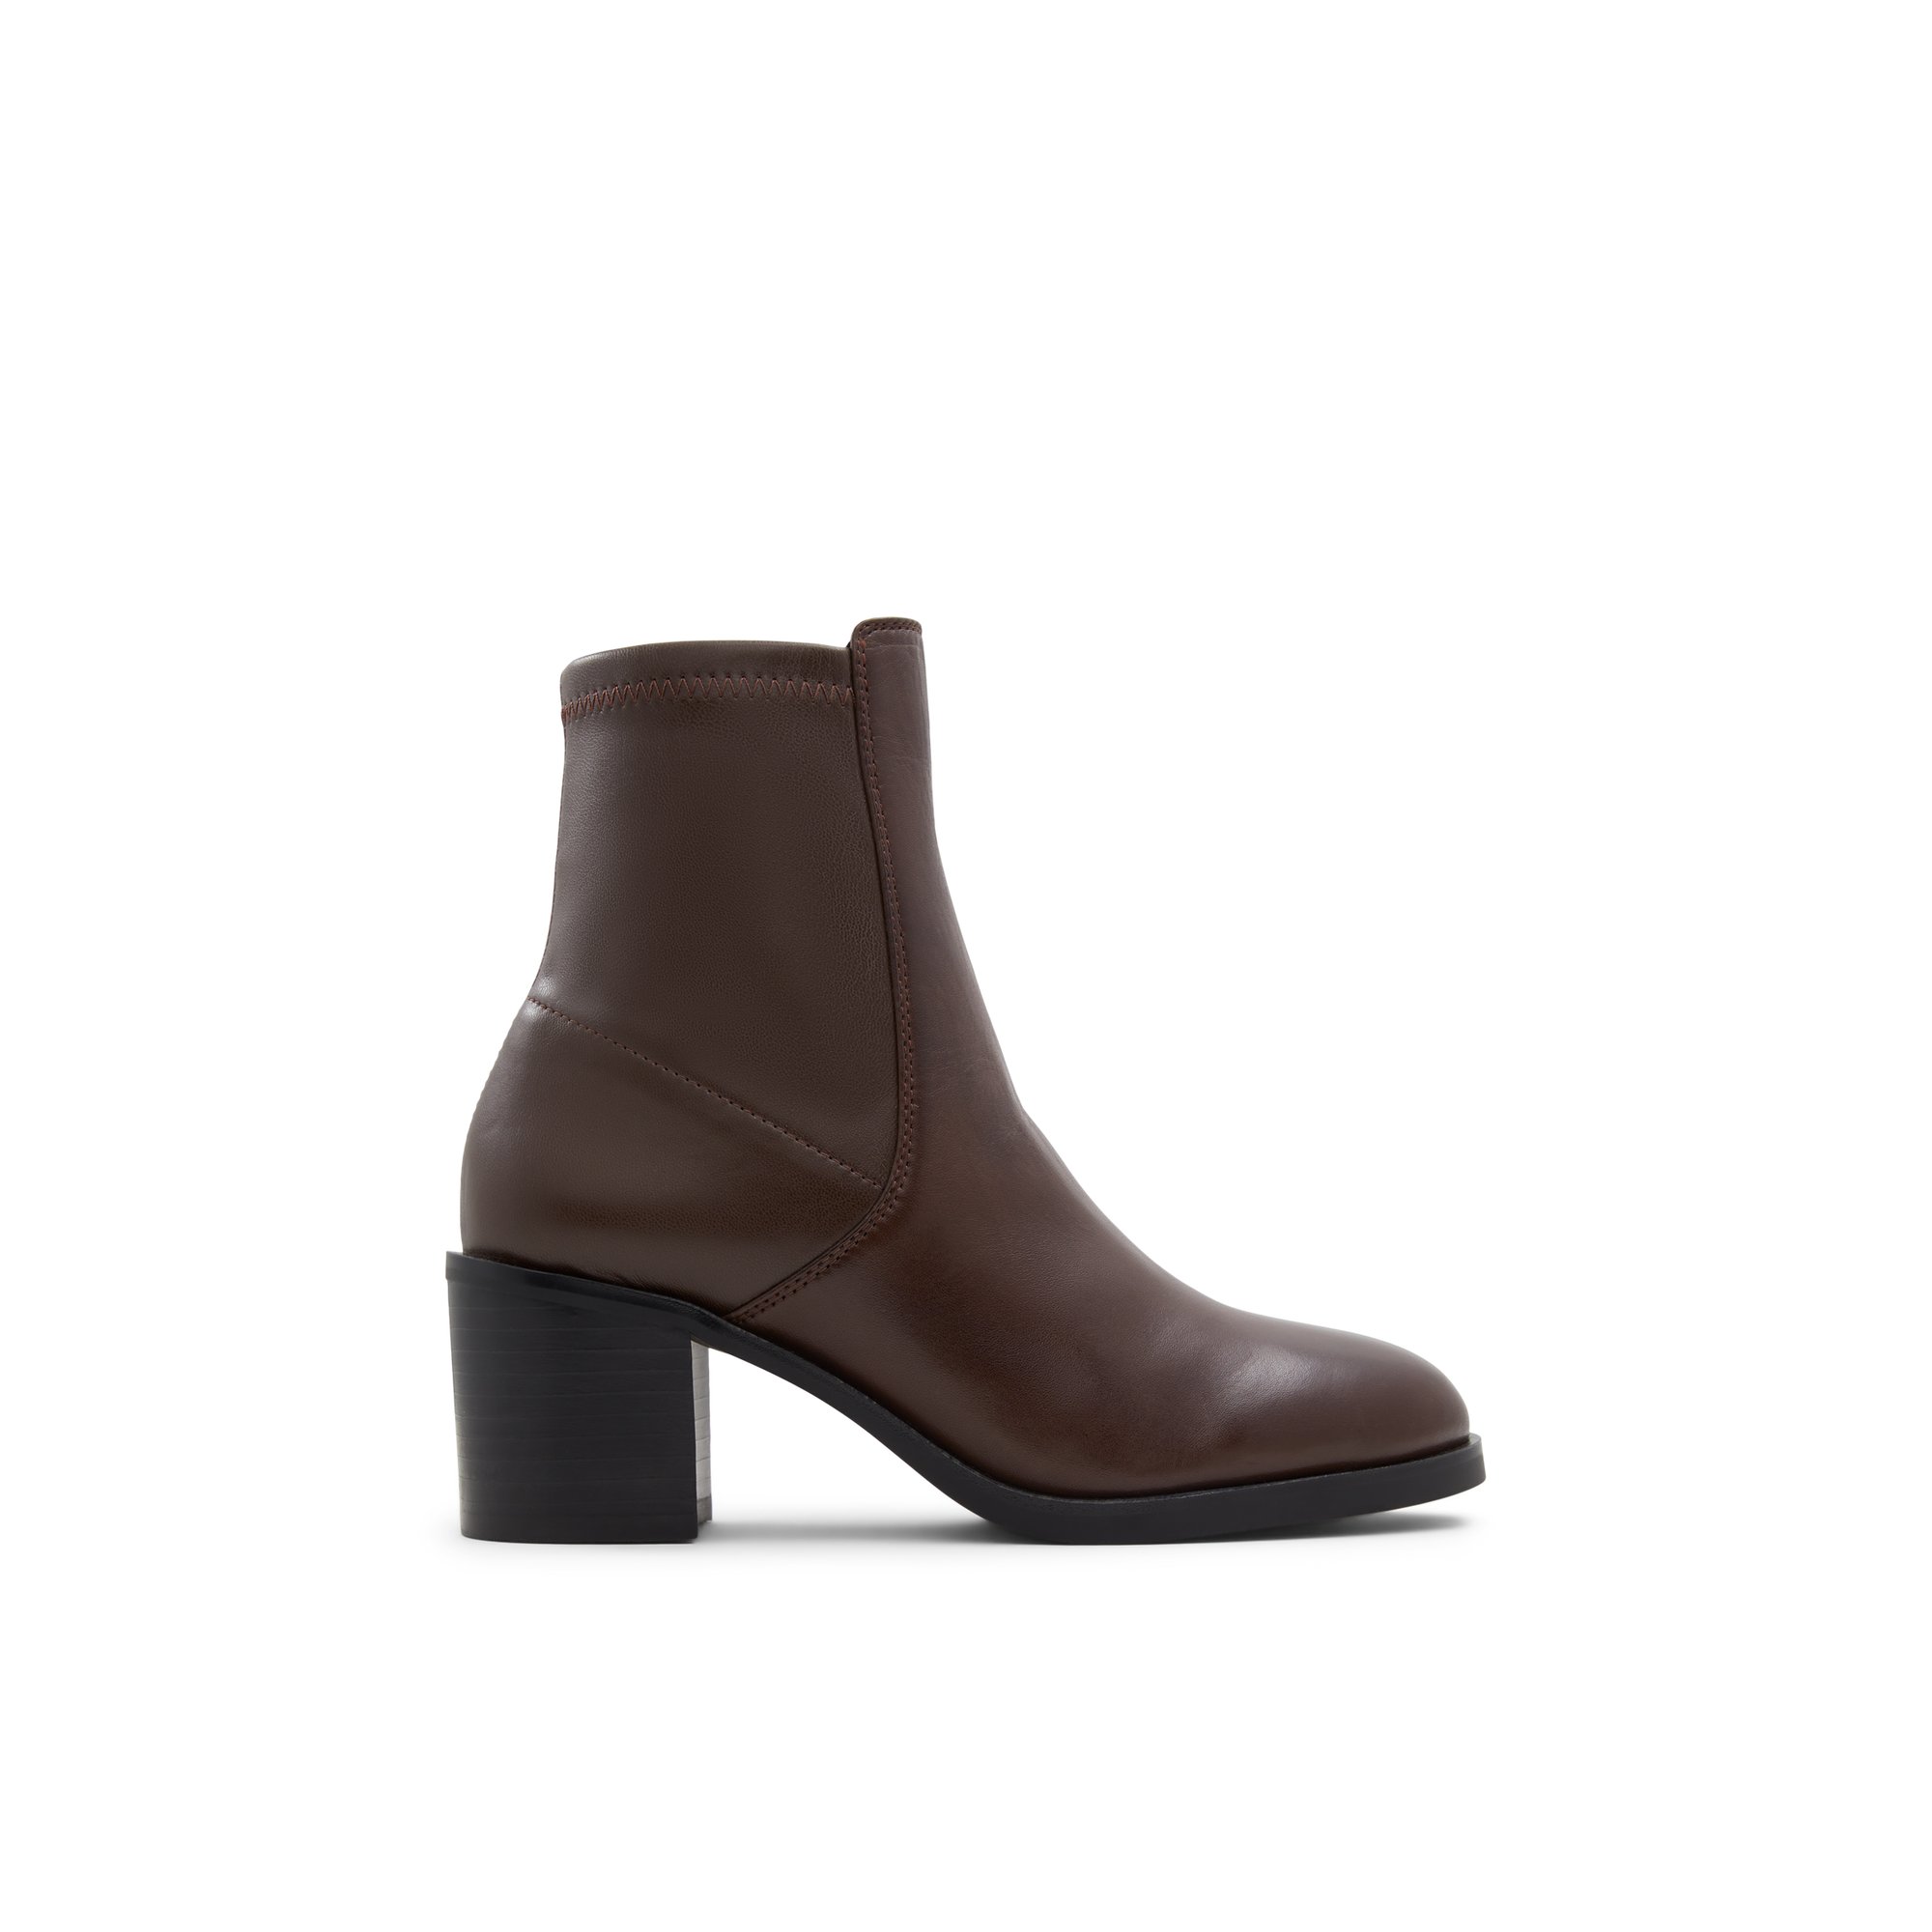 ALDO Ranobrerel - Women's Boots Casual - Brown